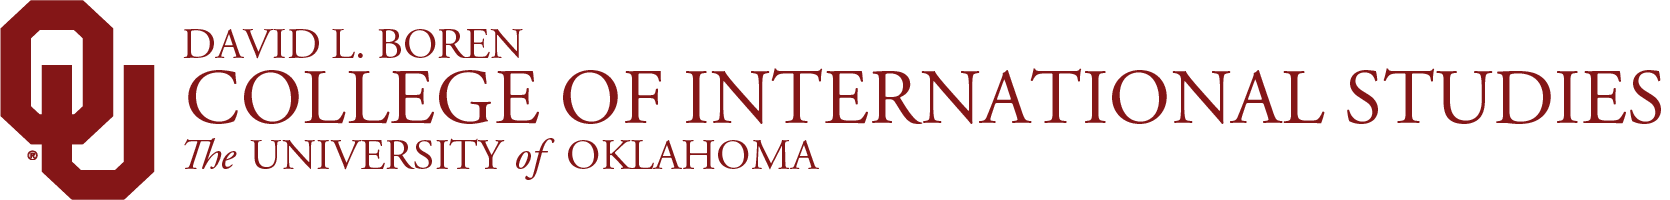 Interlocking OU, College of International Studies, The University of Oklahoma website wordmark.